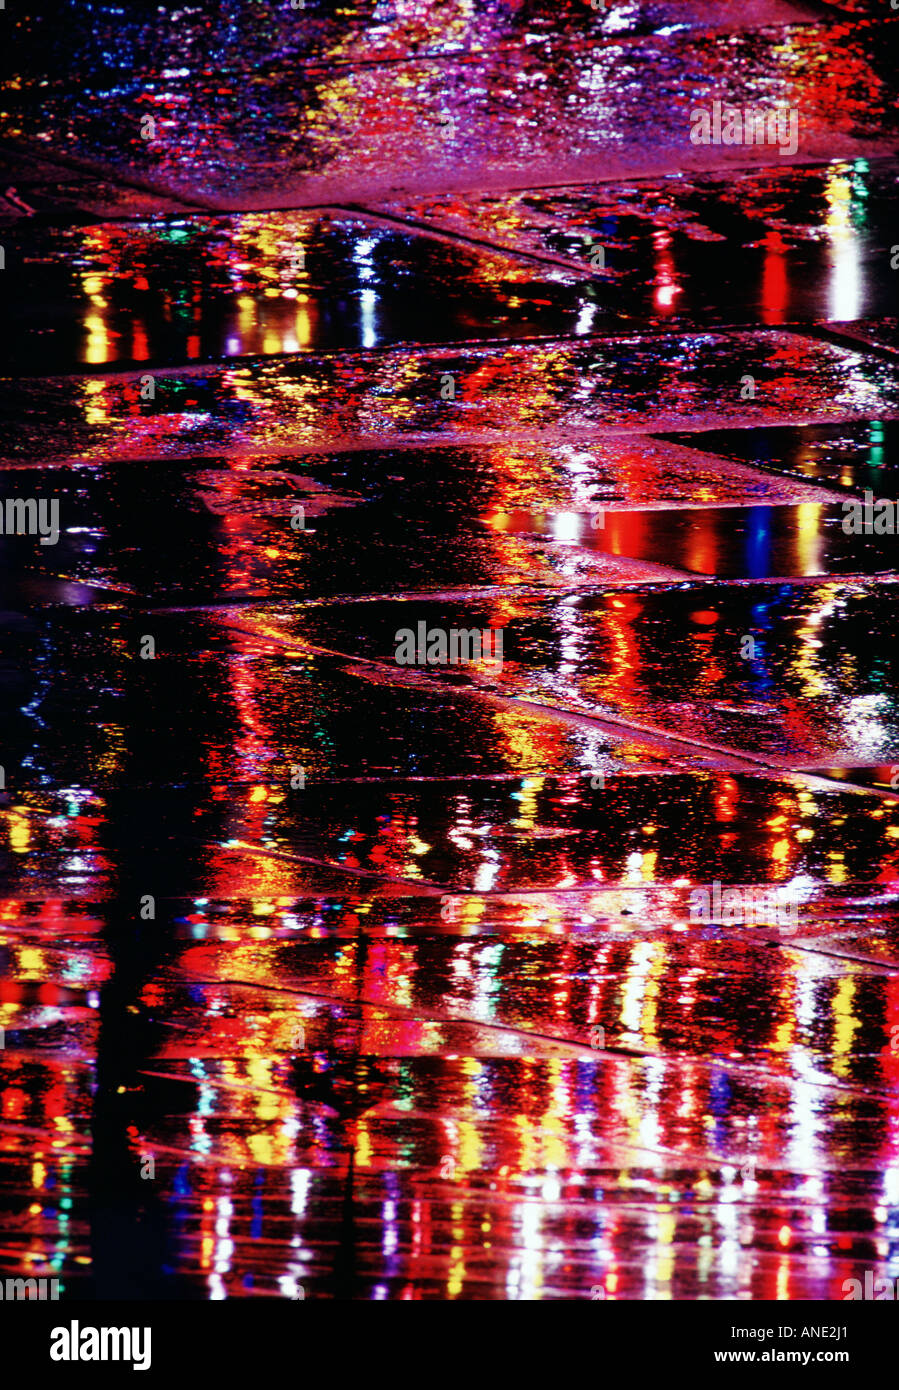 City lights reflecting on wet paving stones Trafalgar Square London United Kingdom Stock Photo